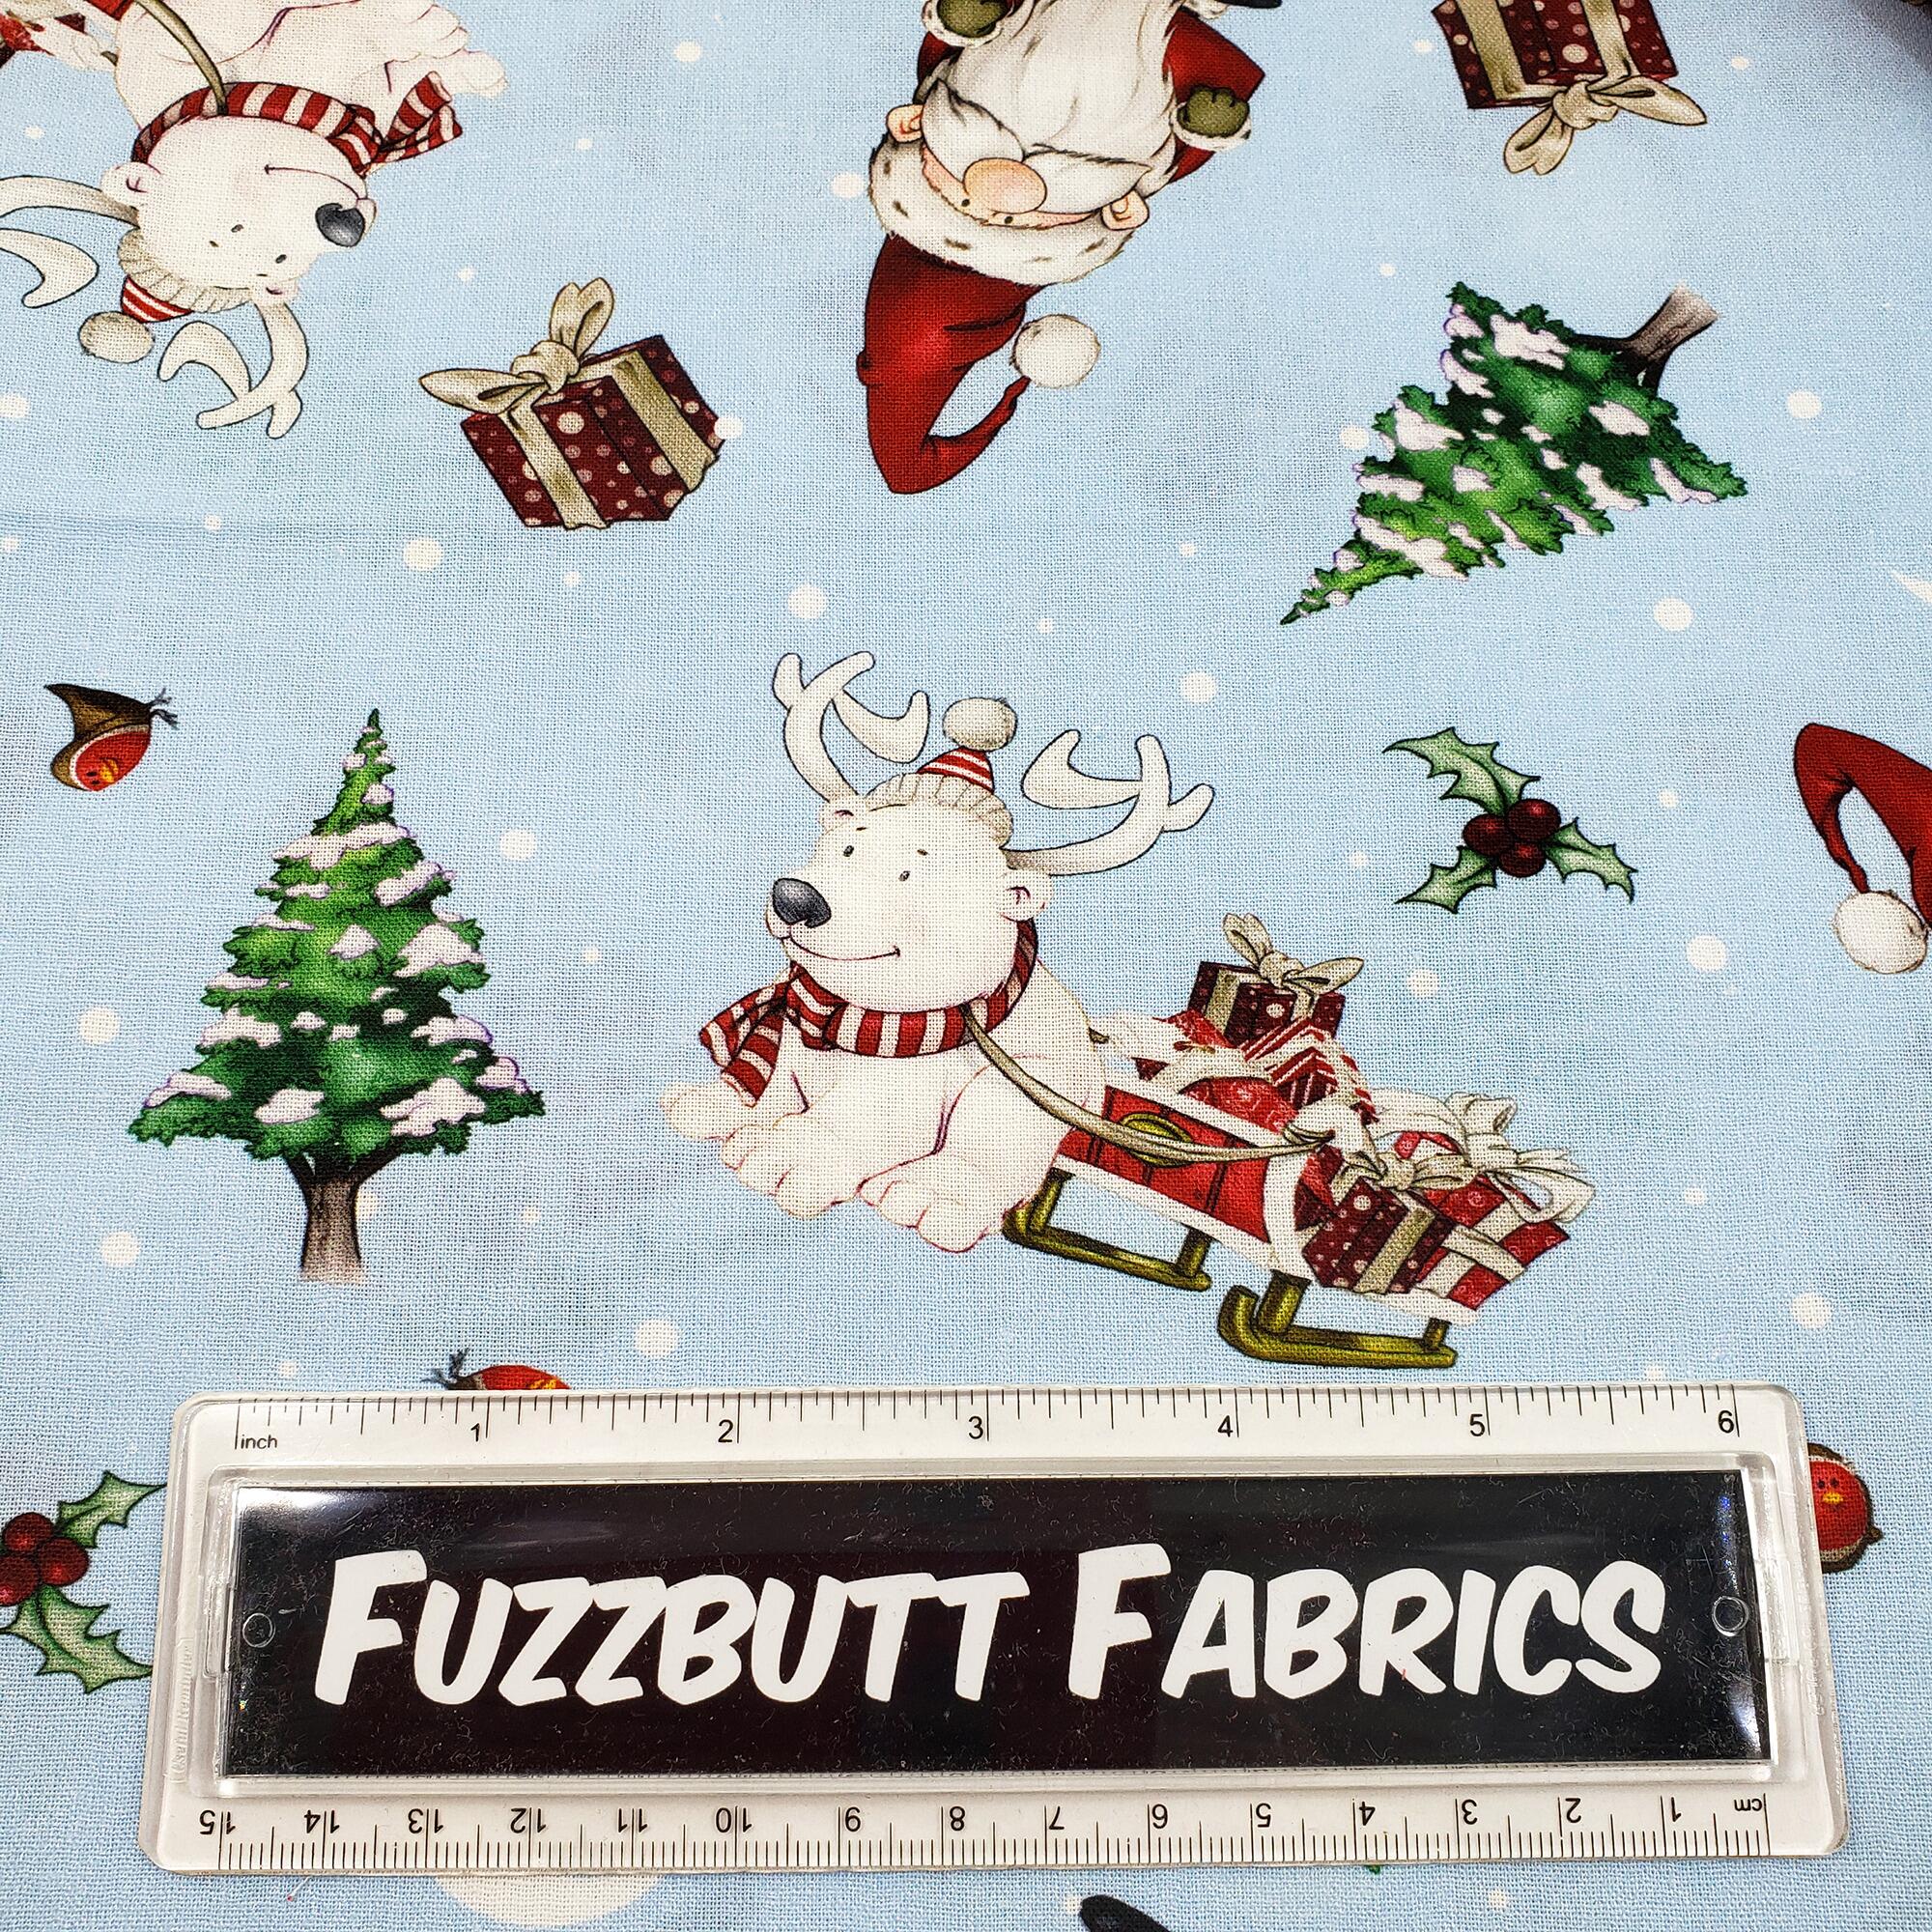 christmas fabric,fat quarter,gnomes,cotton,red,snow,festive,snowflakes,santa,norfolk fabric